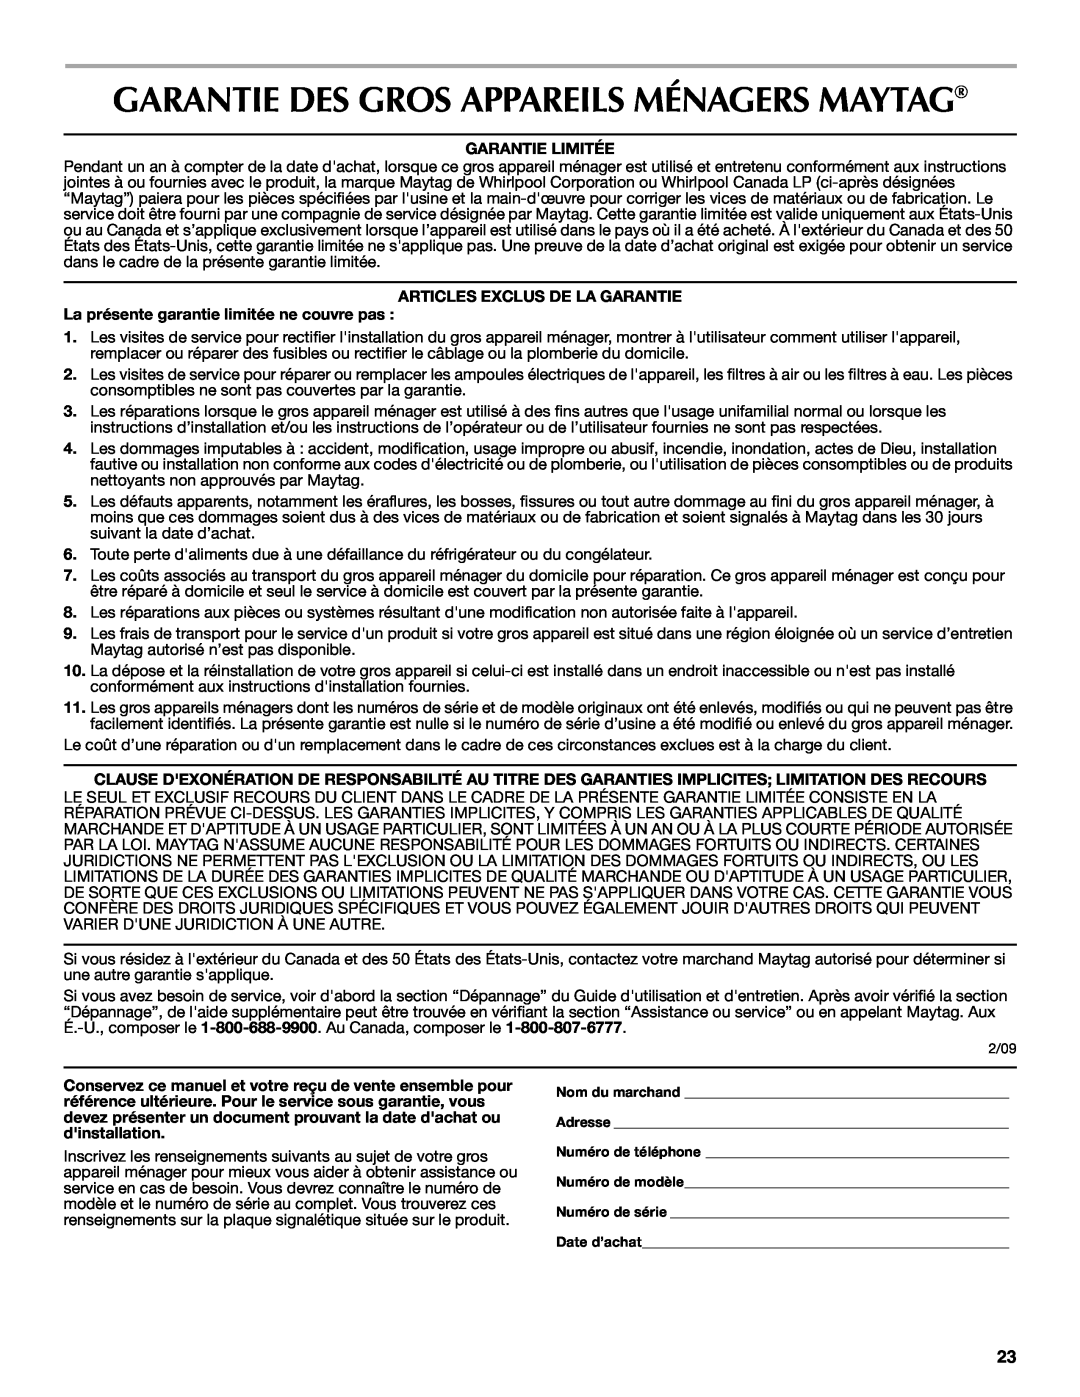 Maytag W10274254C manual Garantie Des Gros Appareils Ménagers Maytag, Garantie Limitée, Articles Exclus De La Garantie 